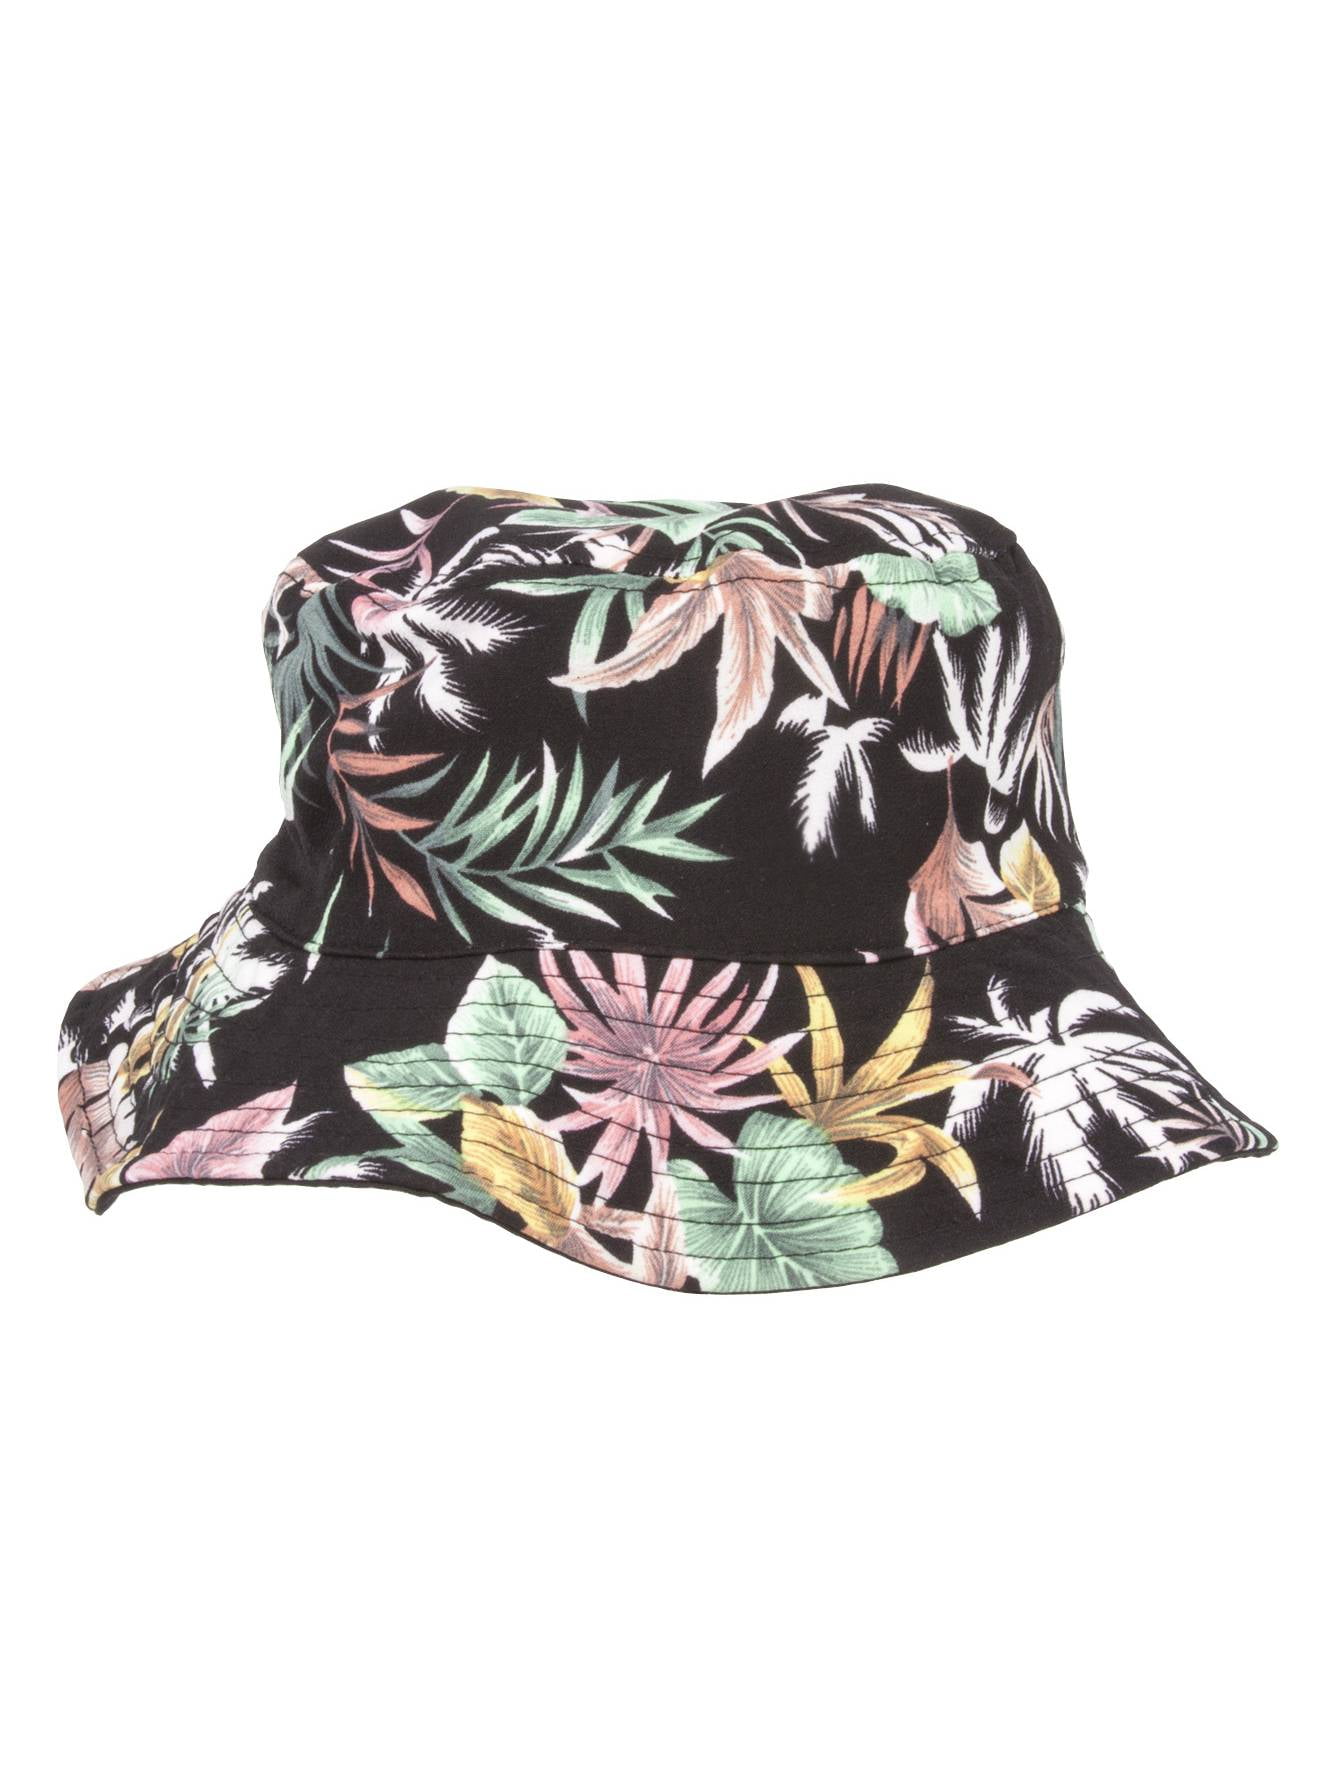 Floral Black Fitted Bucket Hat - L/XL | Walmart Canada